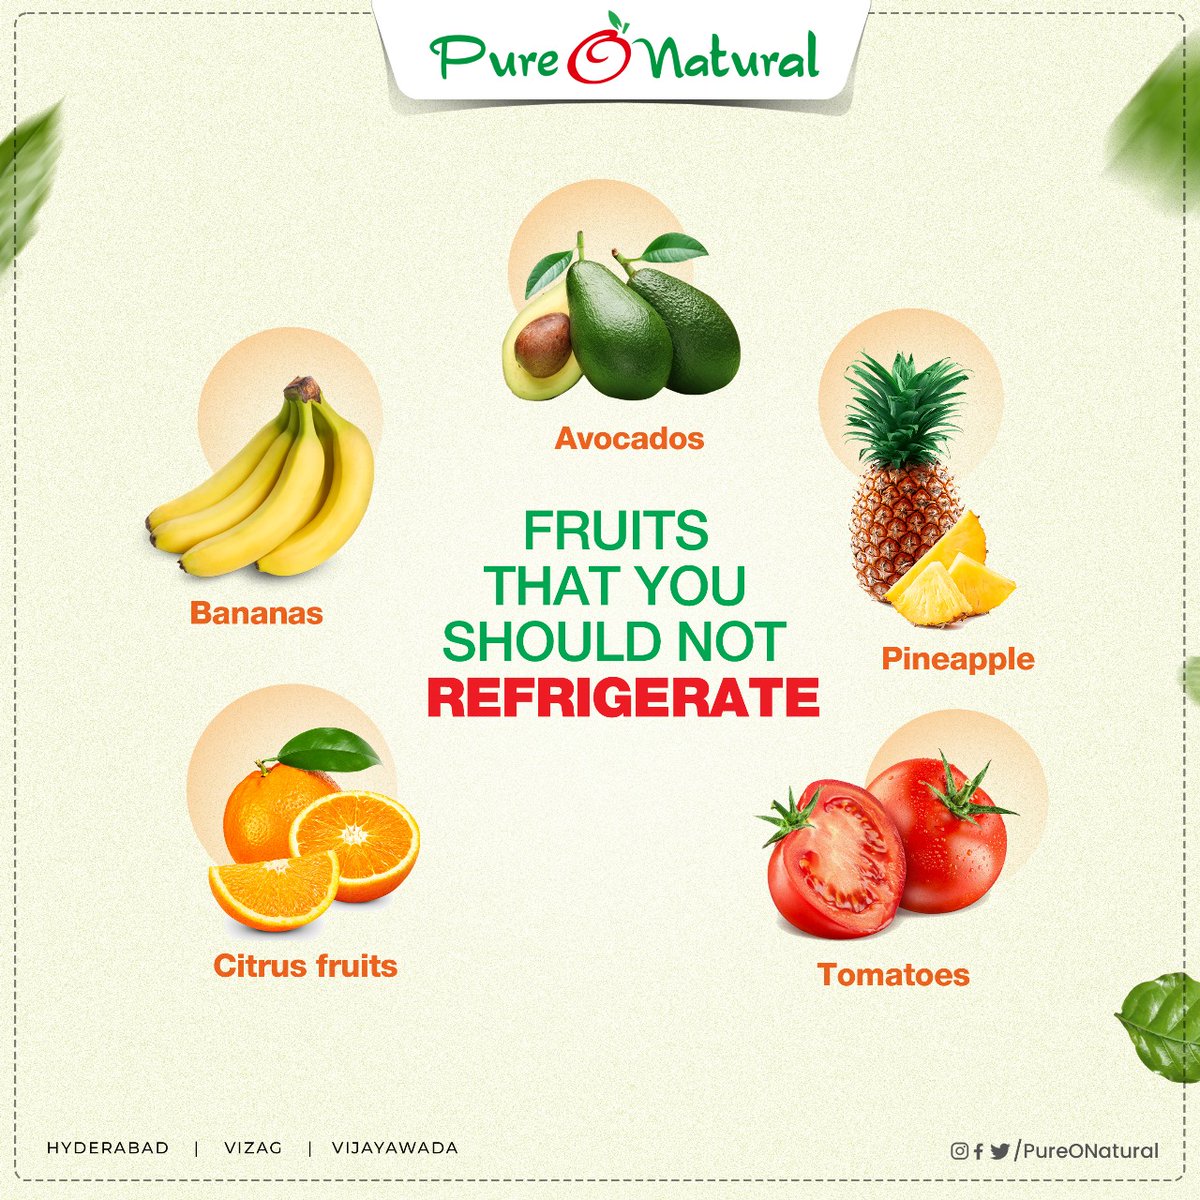 Fruits that you should not refrigerate❄

#PureONatural #Hyderabad #Vizag #Vijaywada #FarmFresh #FreshFruits #FreshVegetables